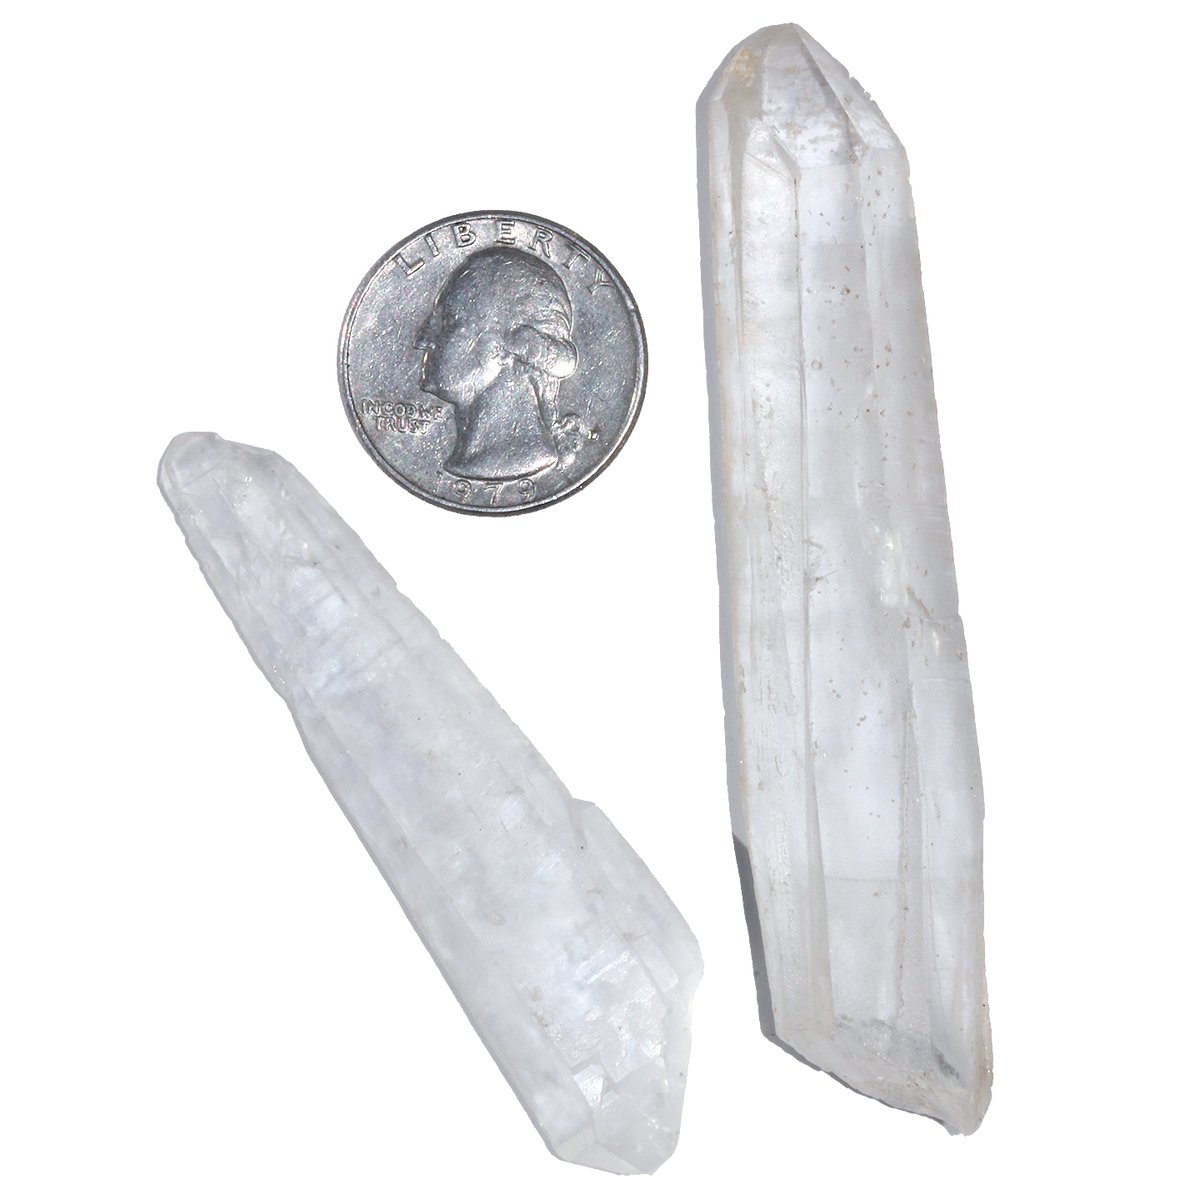 Singing Crystals (Set of 2 shown)